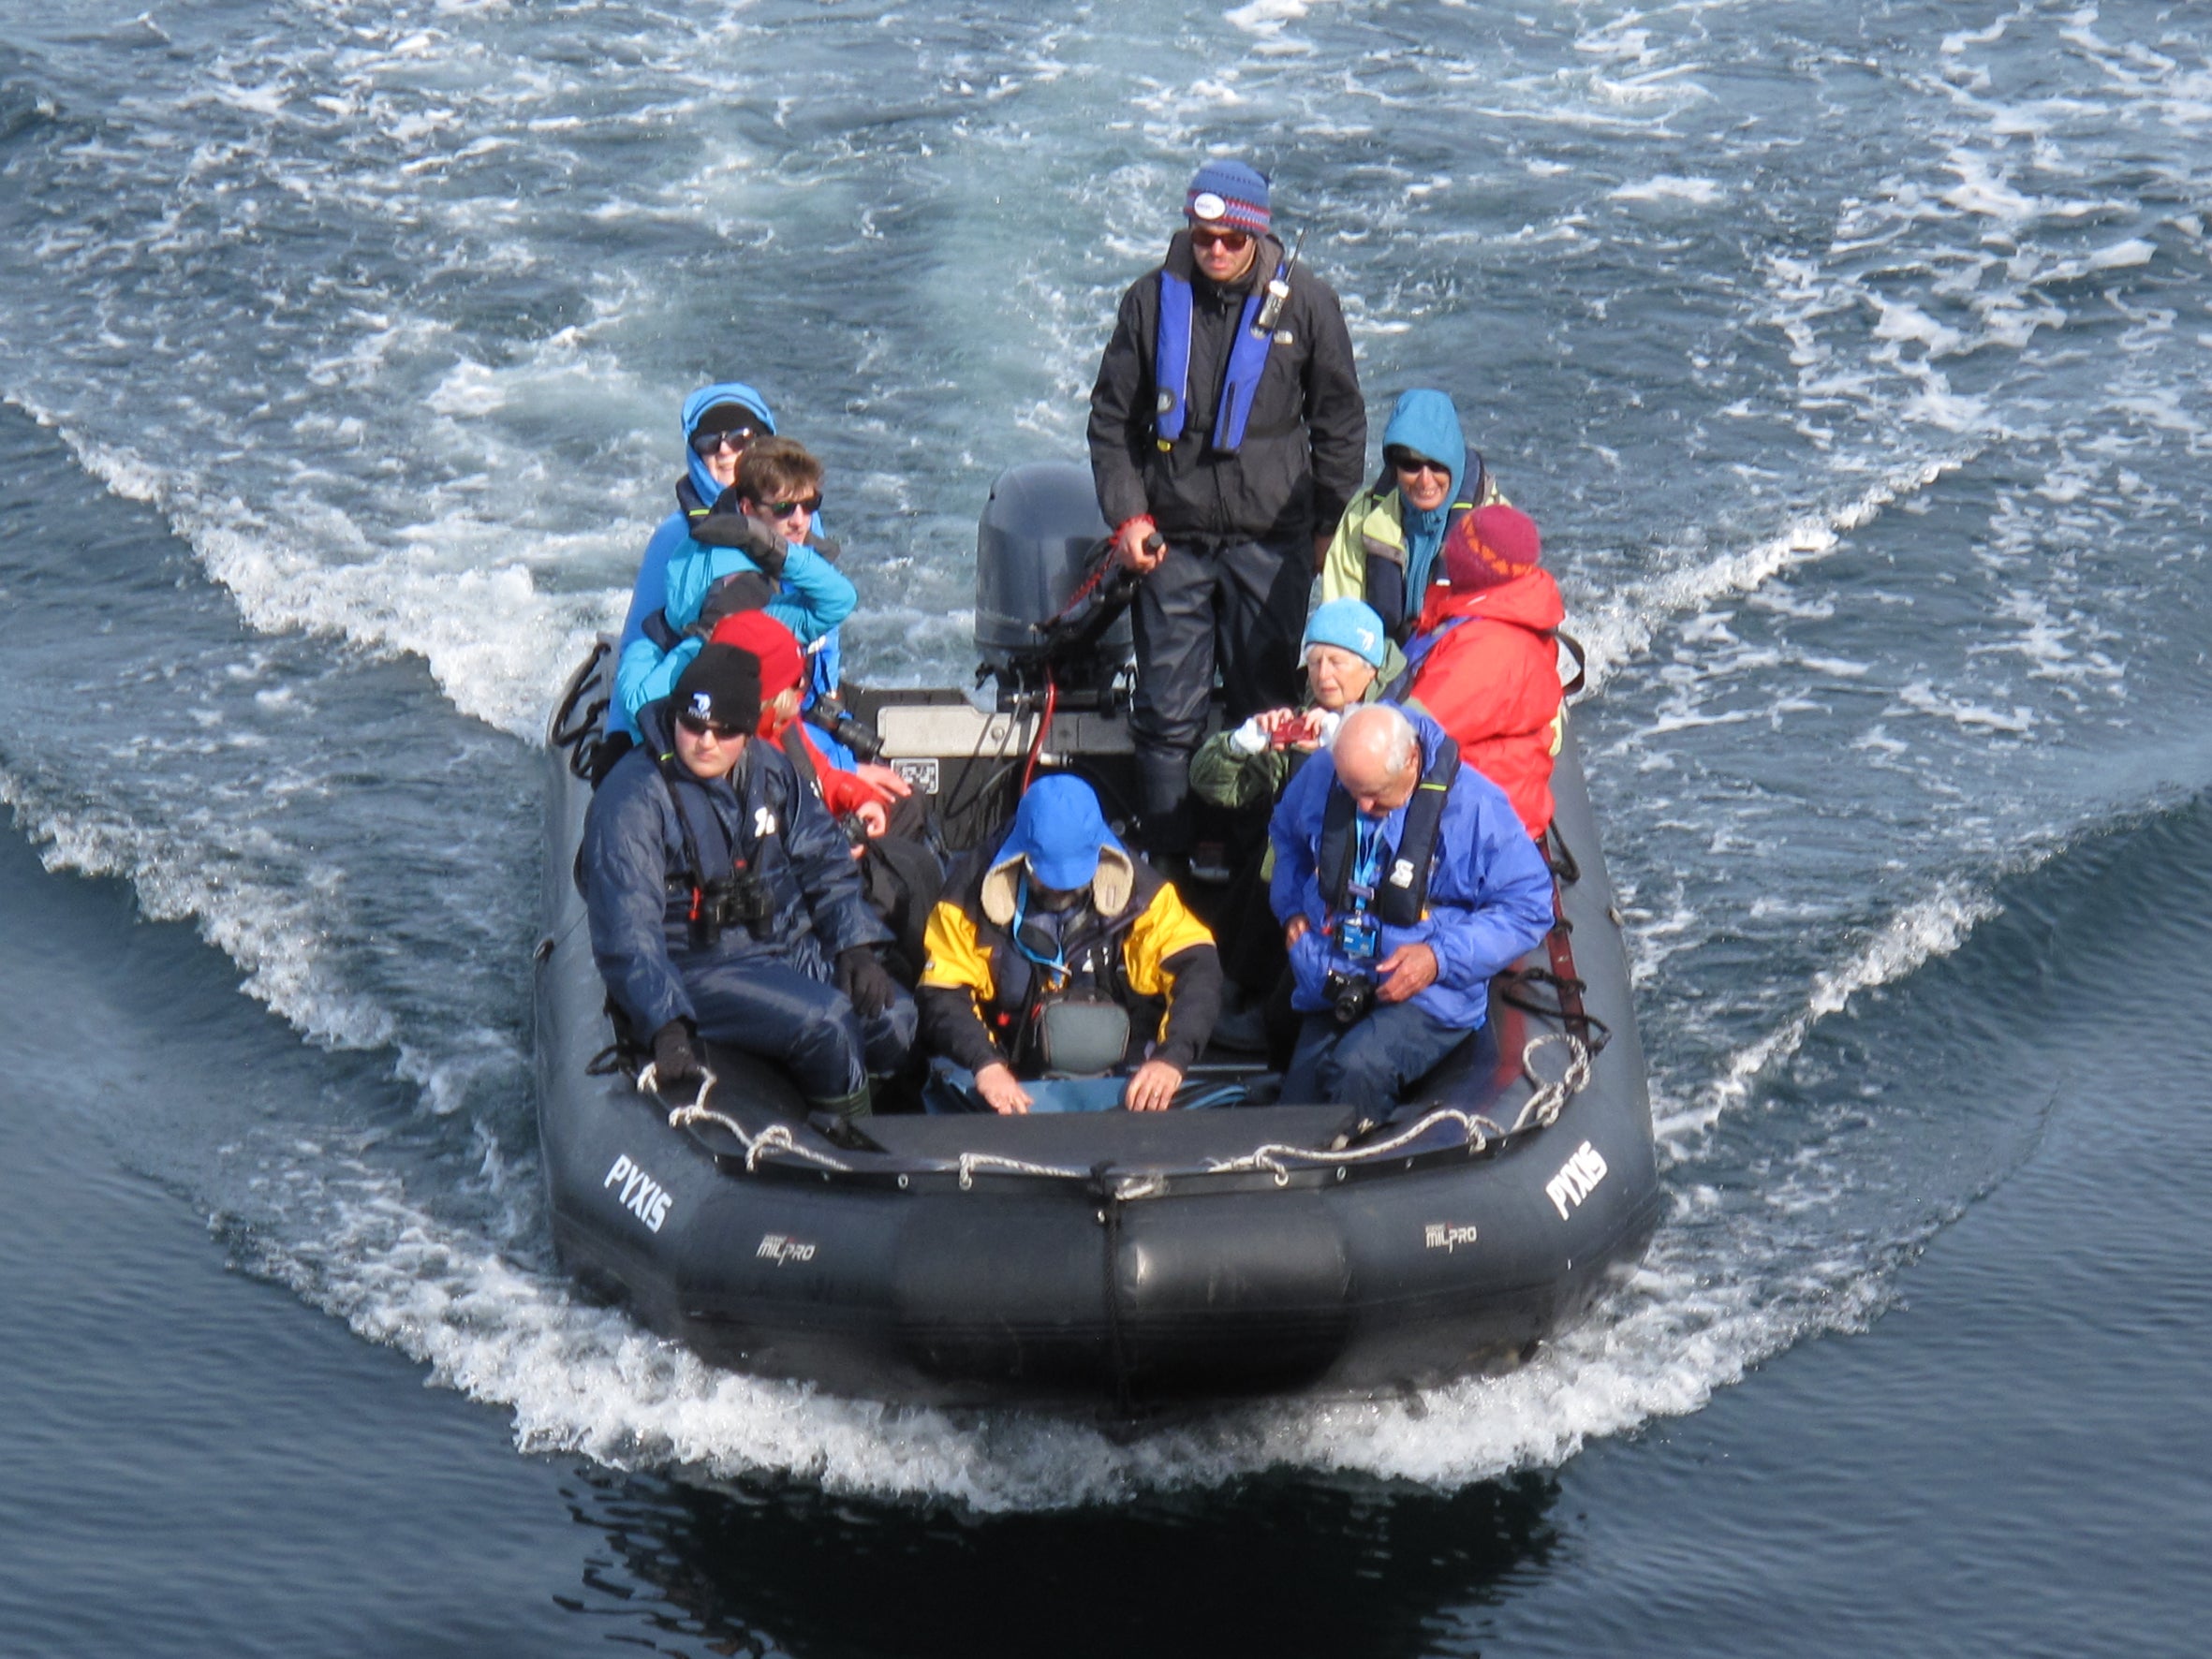 Splashing out: Adventurers off Akpatok Island in Nunavut, Canada